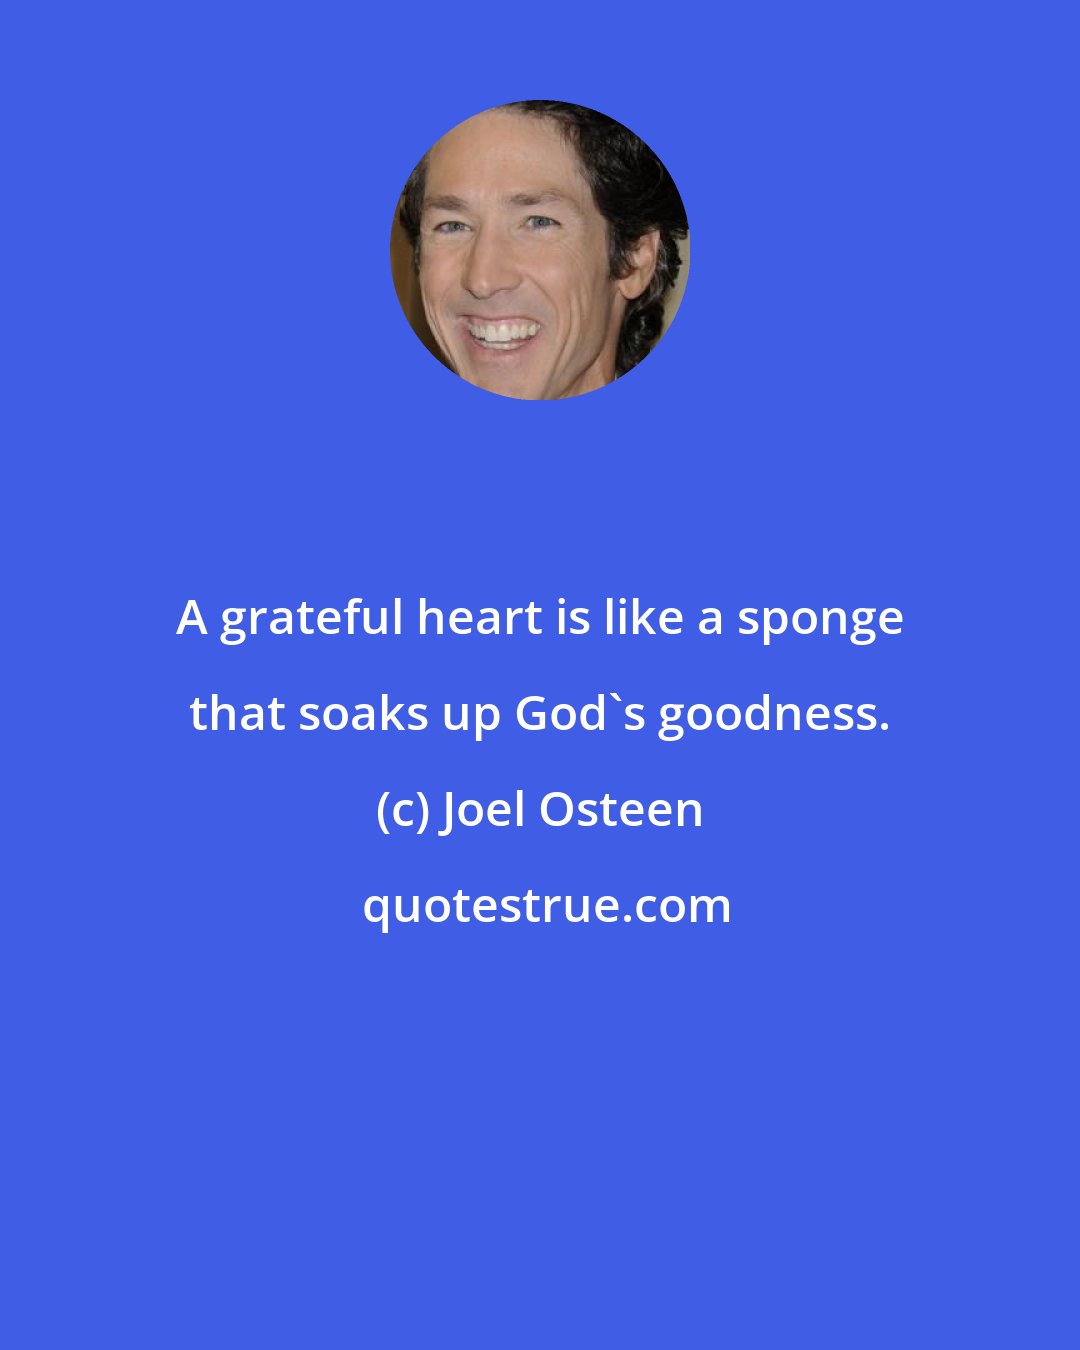 Joel Osteen: A grateful heart is like a sponge that soaks up God's goodness.